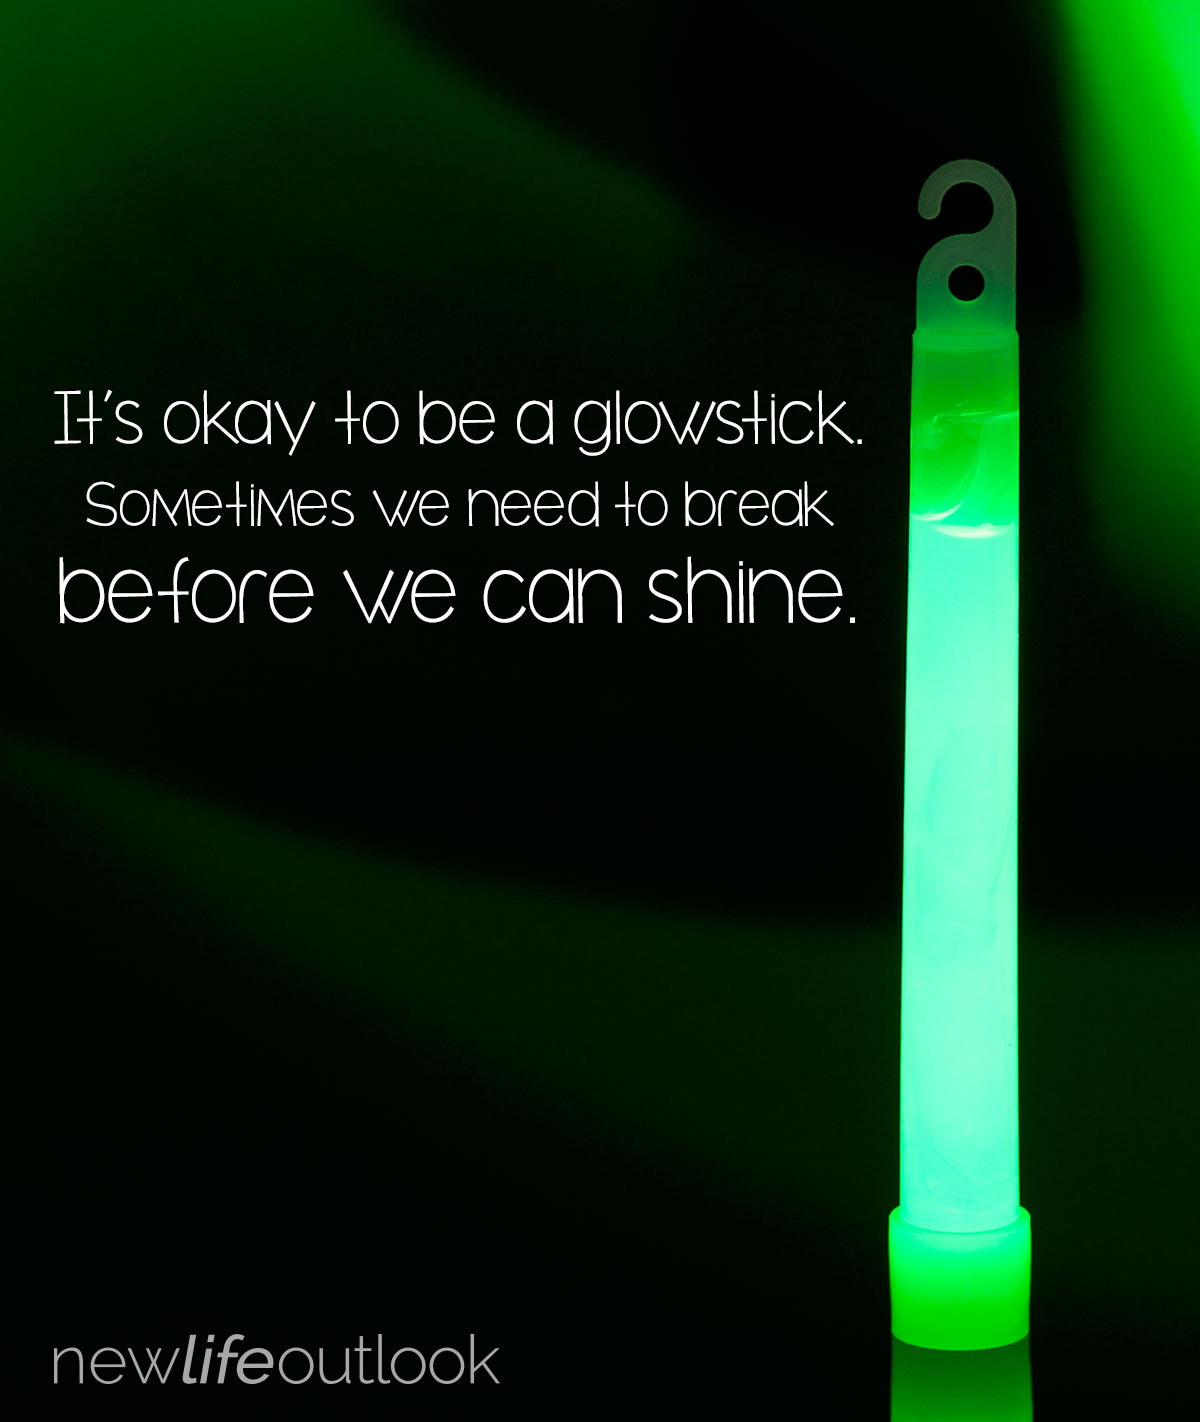 It's okay to be a glowstick